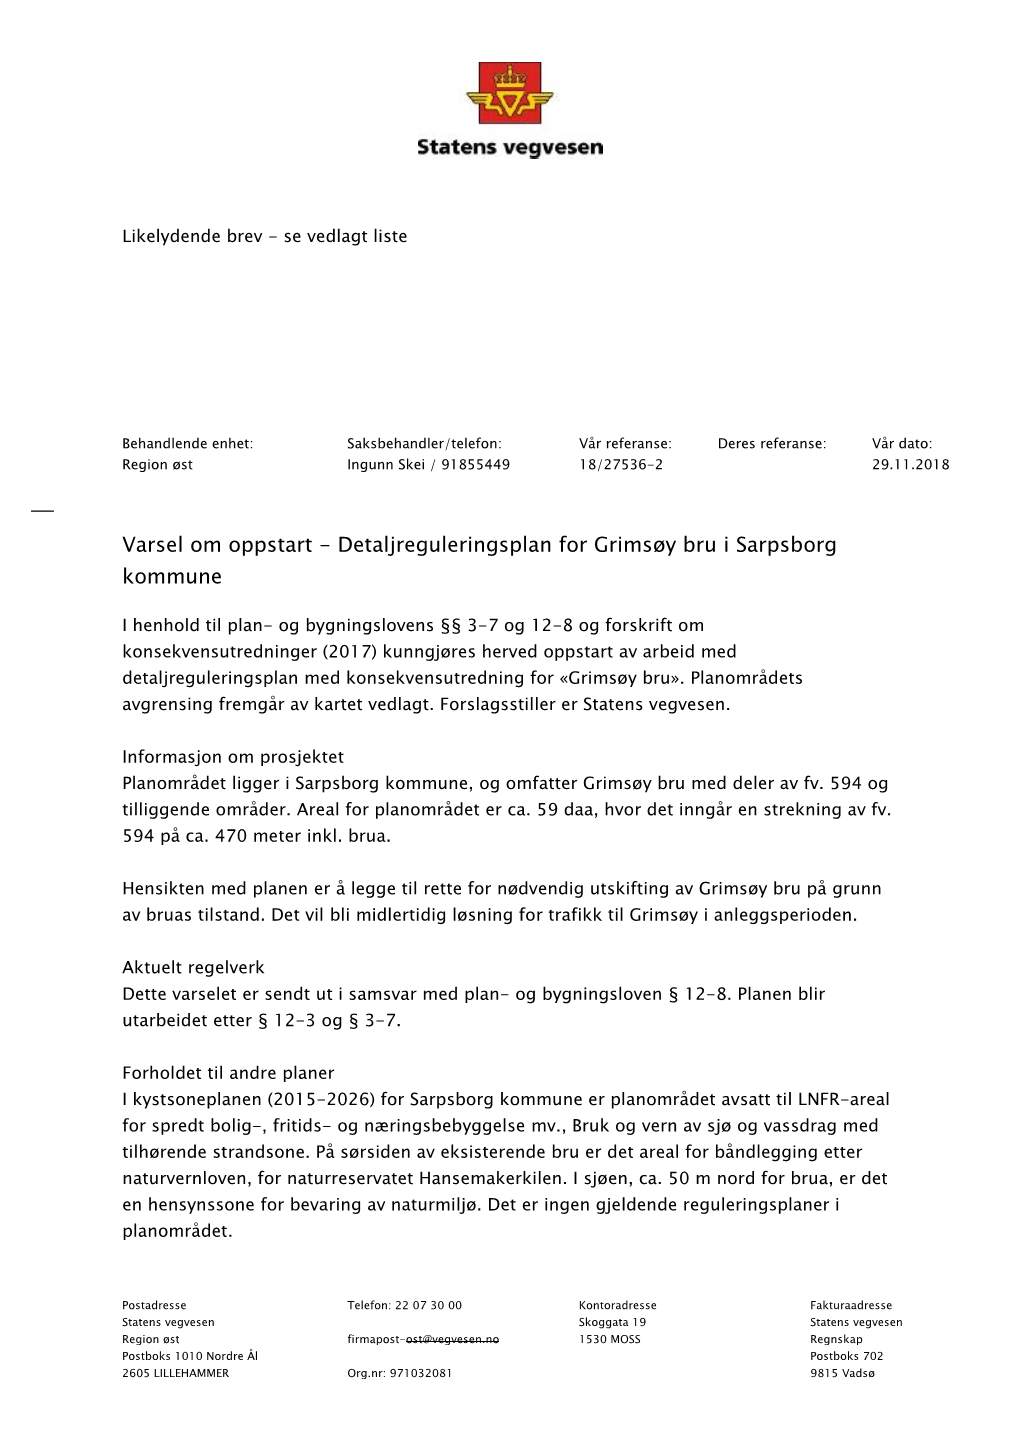 Detaljreguleringsplan for Grimsøy Bru I Sarpsborg Kommune